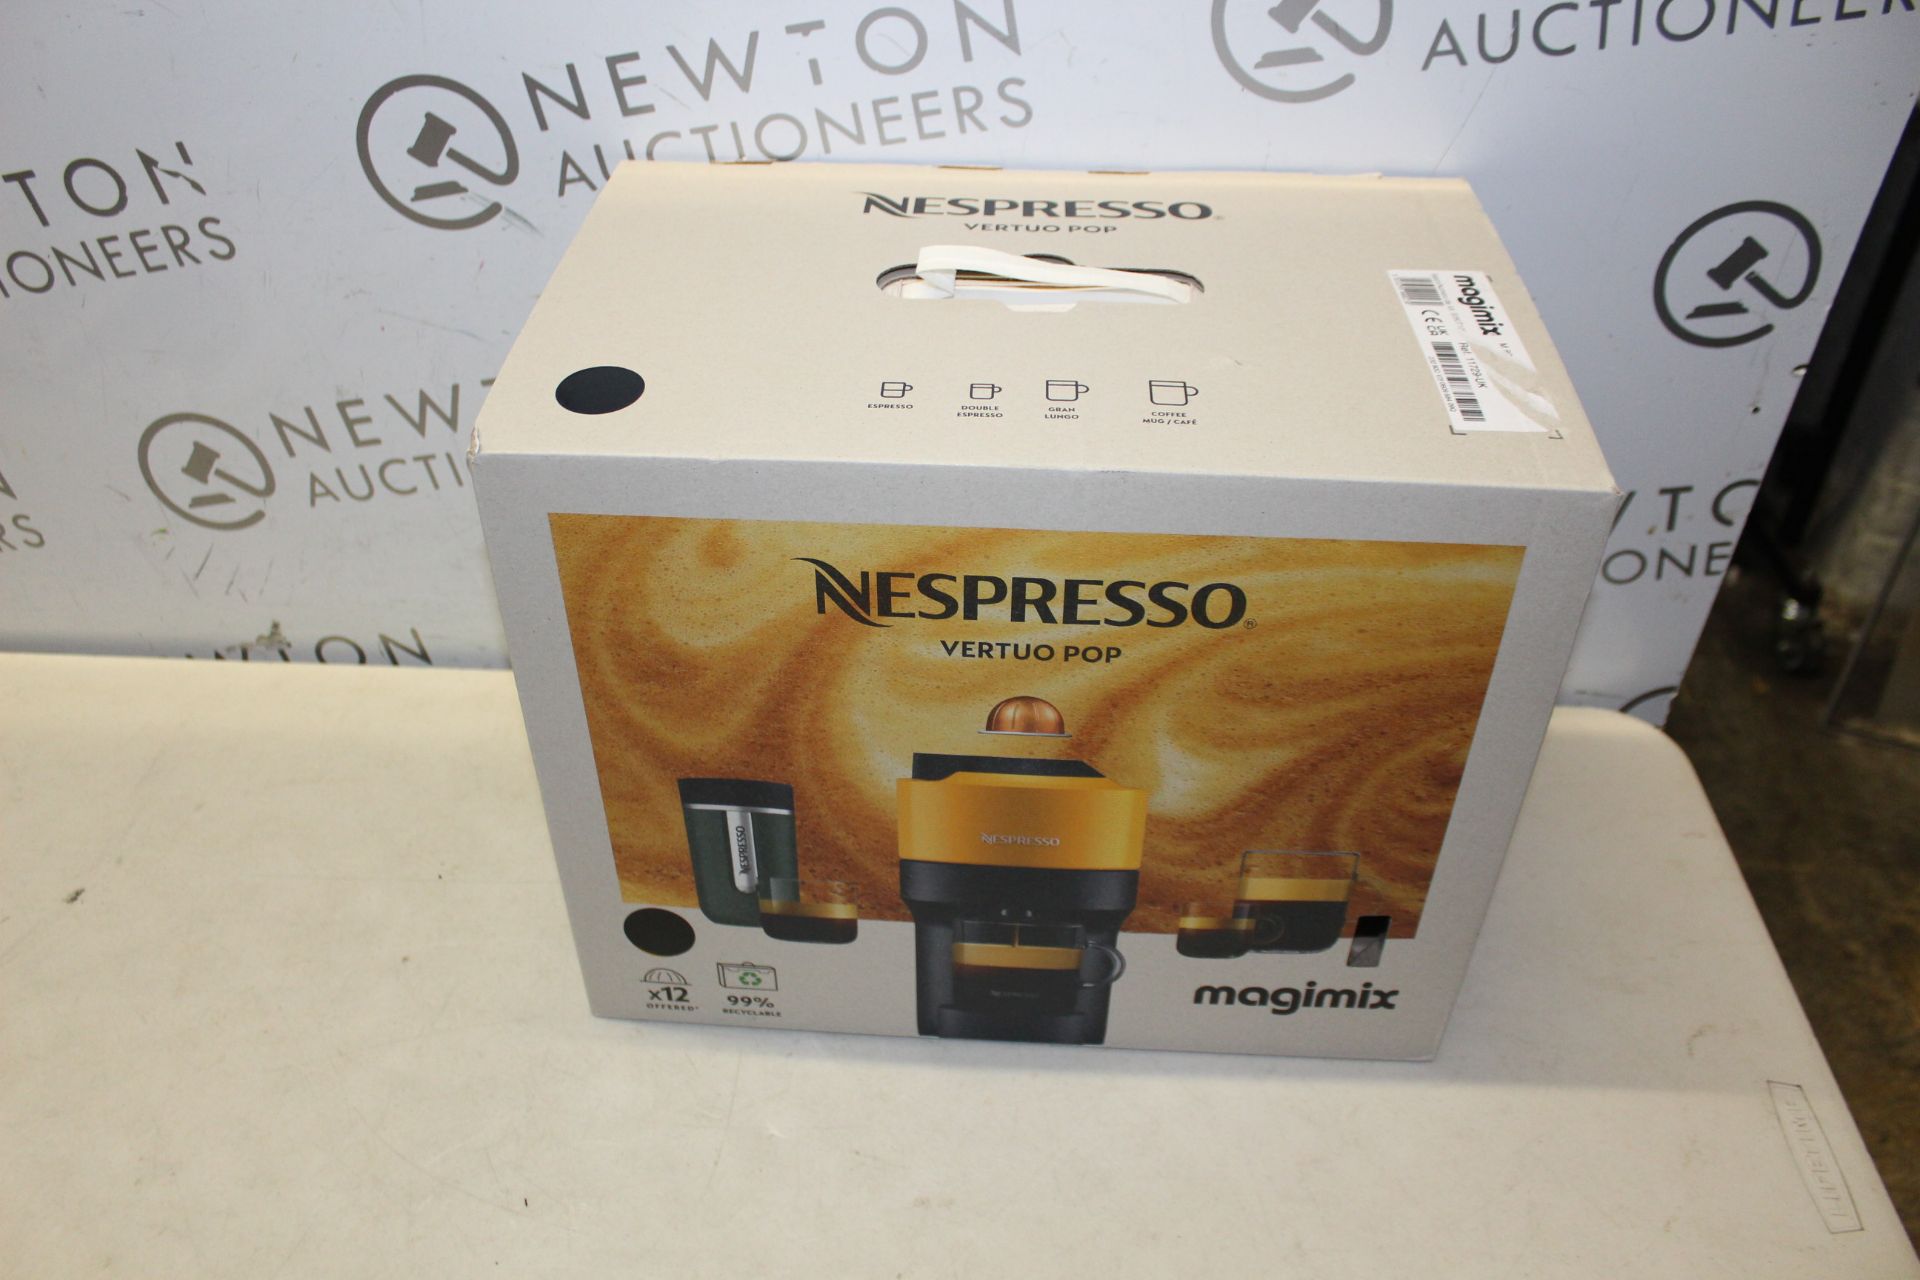 1 BOXED VERTUO POP LIQUORICE BLACK NESPRESSO COFFEE POD MACHINE RRP Â£99.99